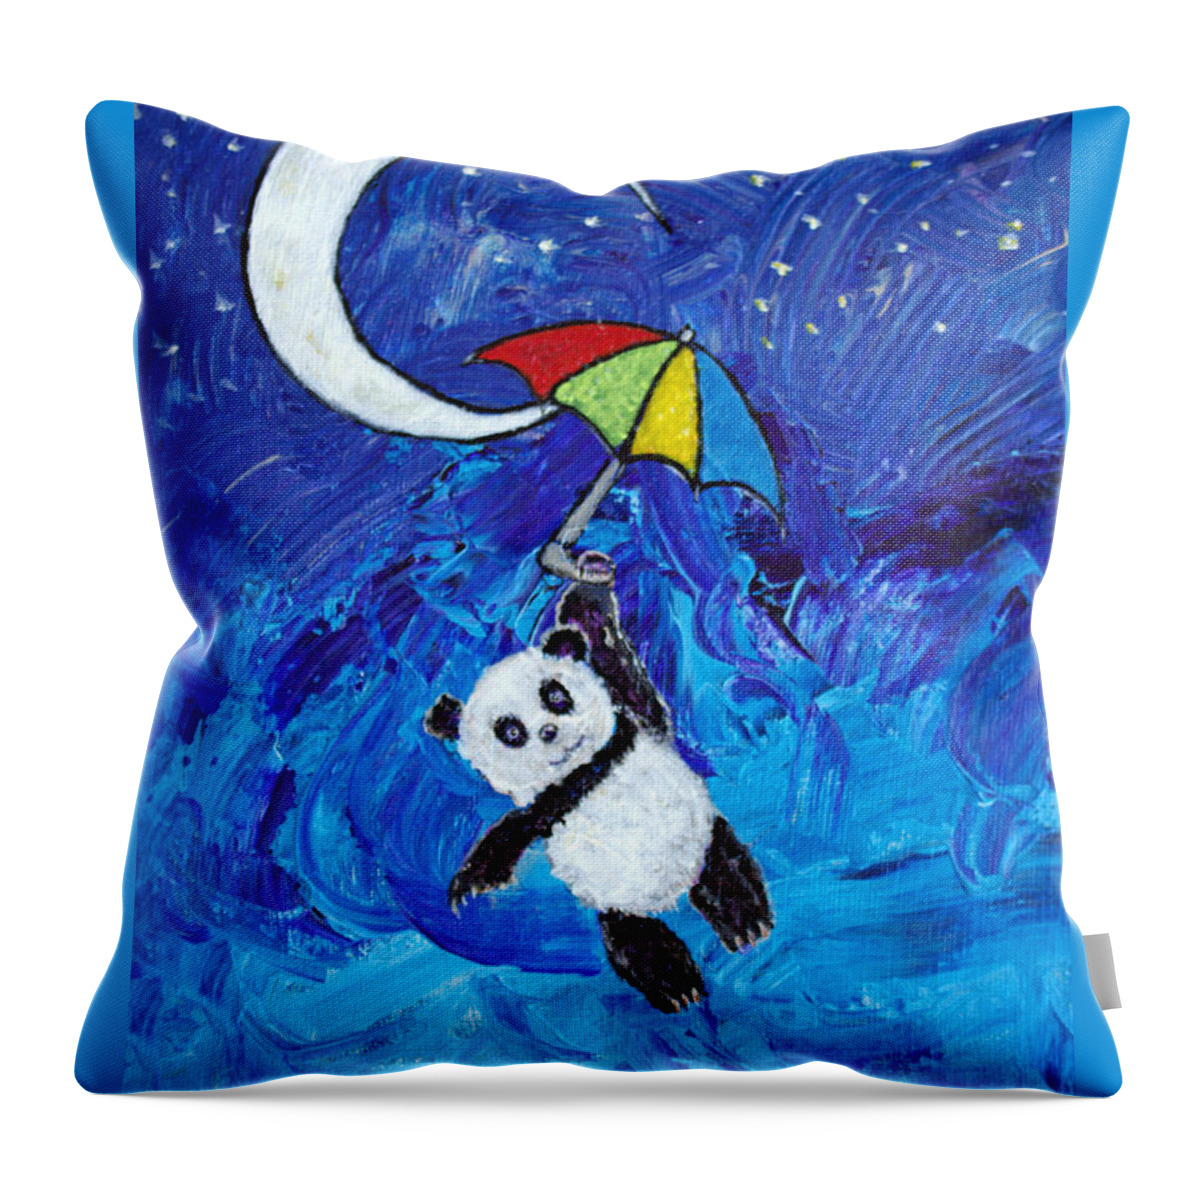 Bears Throw Pillow featuring the painting Panda Dreams by Ella Kaye Dickey